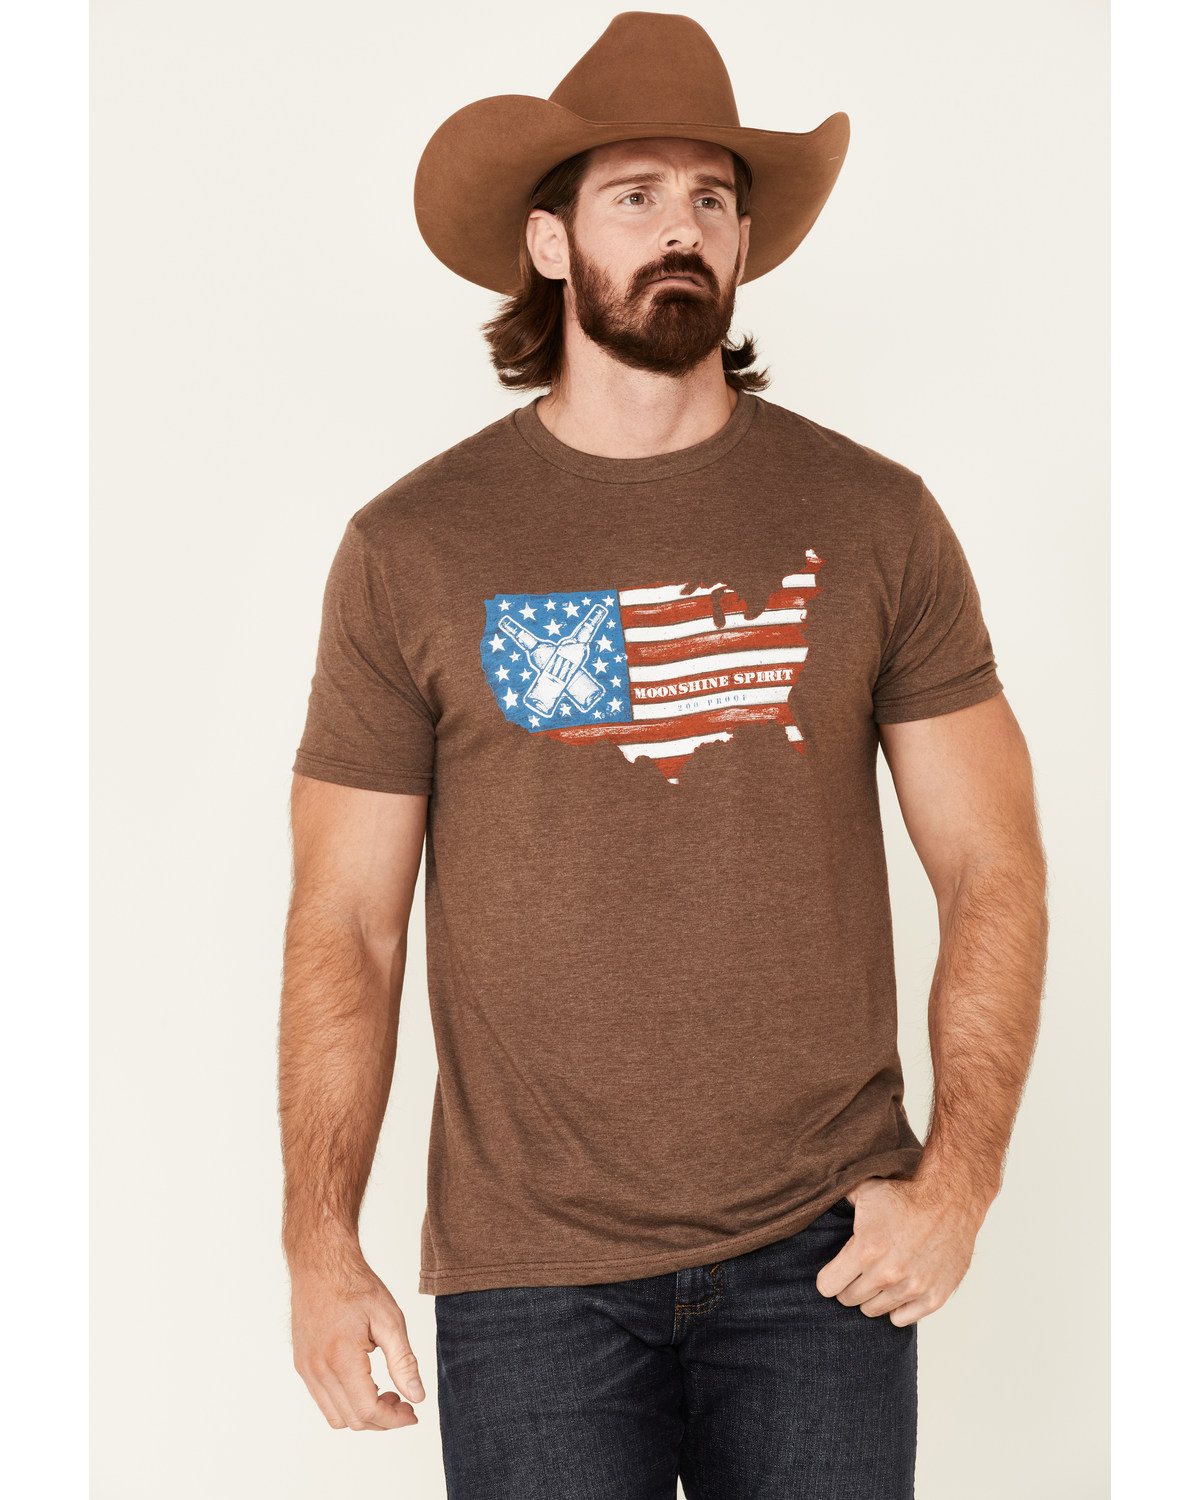 Moonshine Spirit Men's 120 Proof USA Graphic Short Sleeve T-Shirt